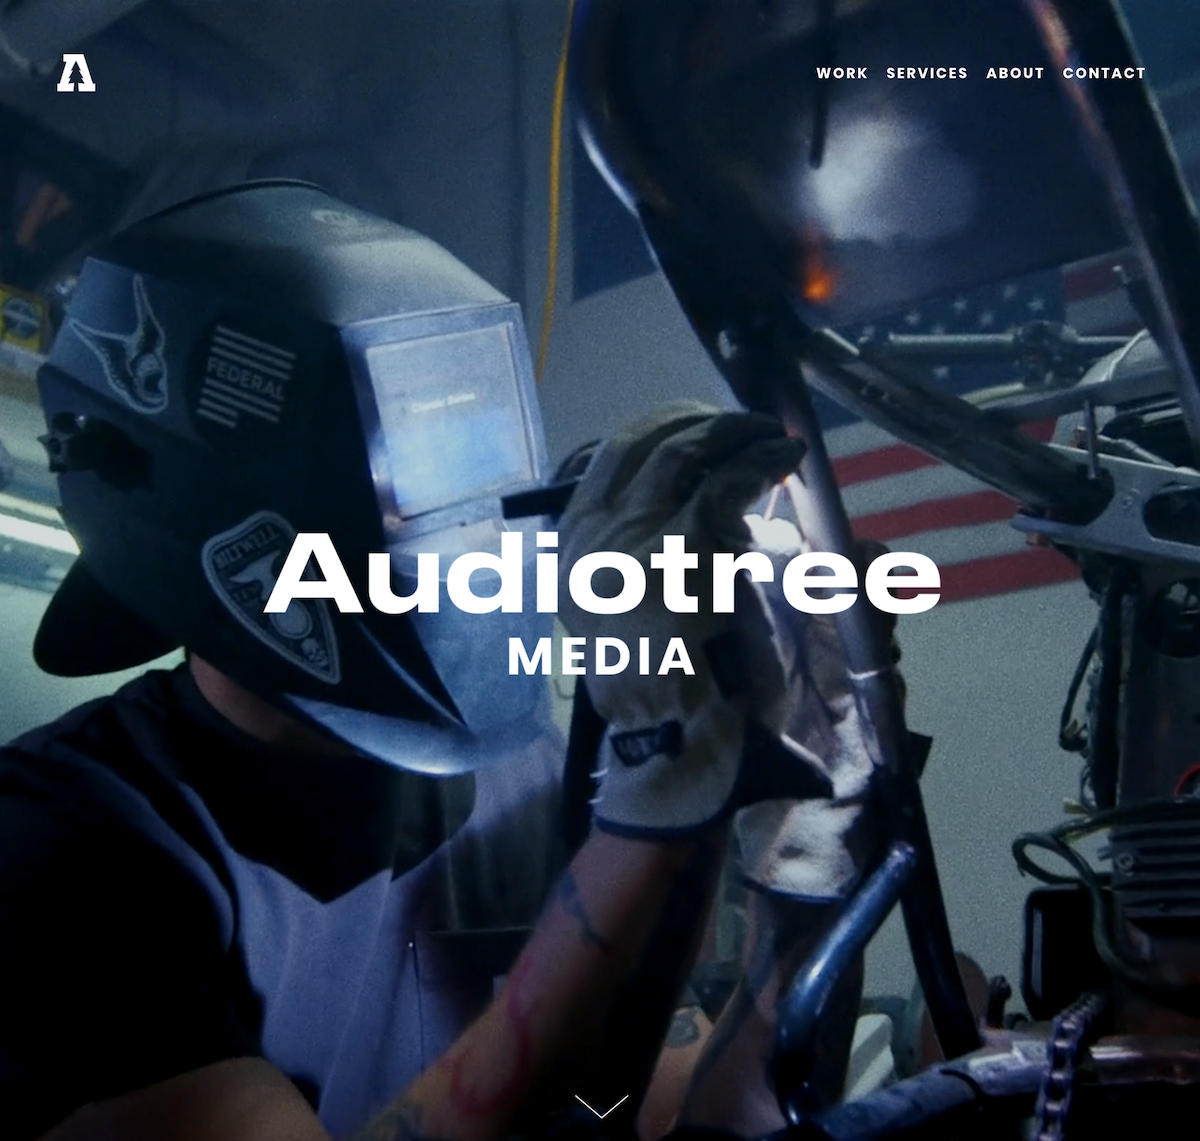   audiotree.media  